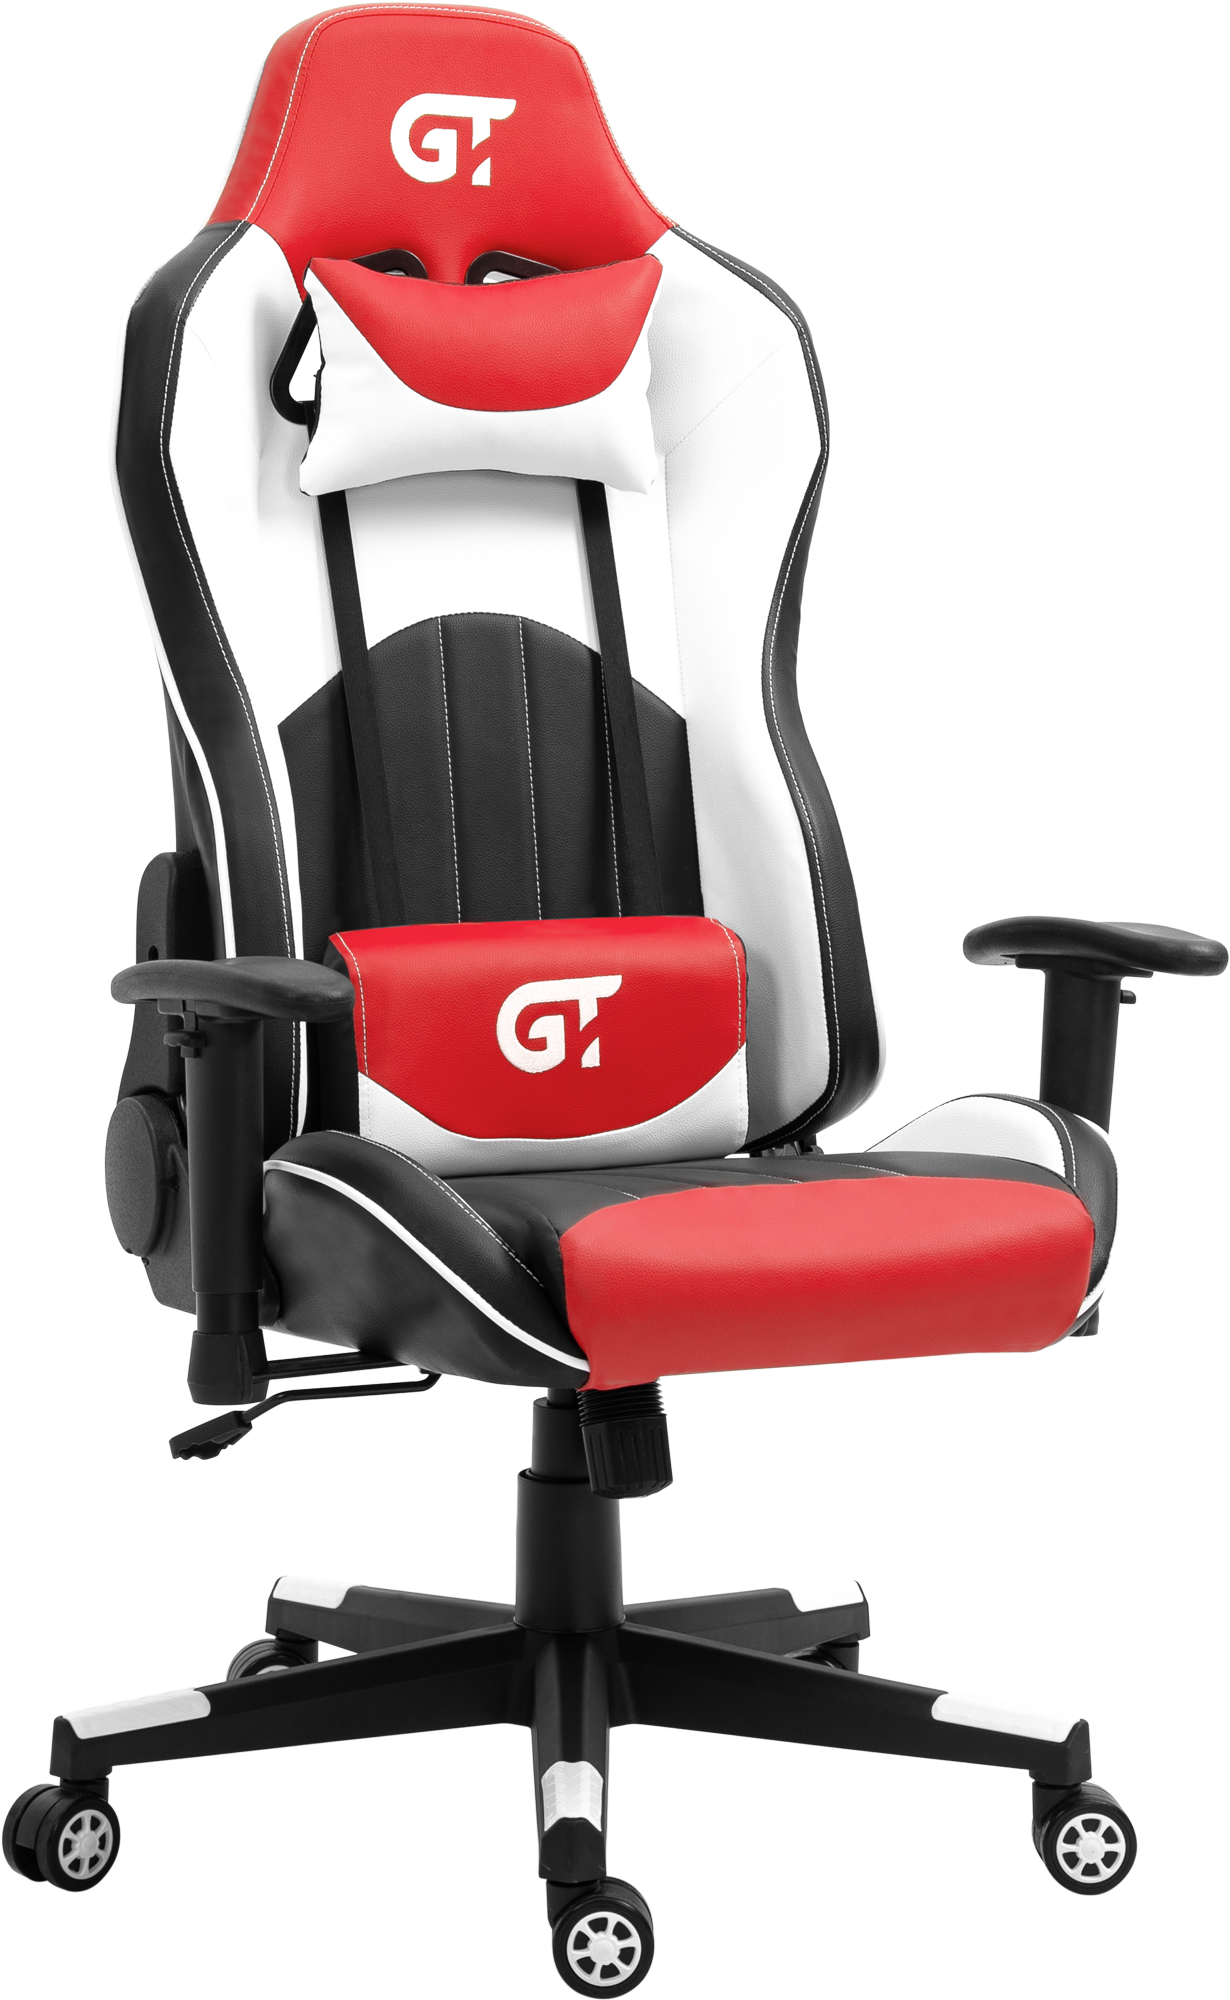 Геймерське крісло GT Racer чорне червоно-біле (X-5813 Black/Red/White) - фото 2